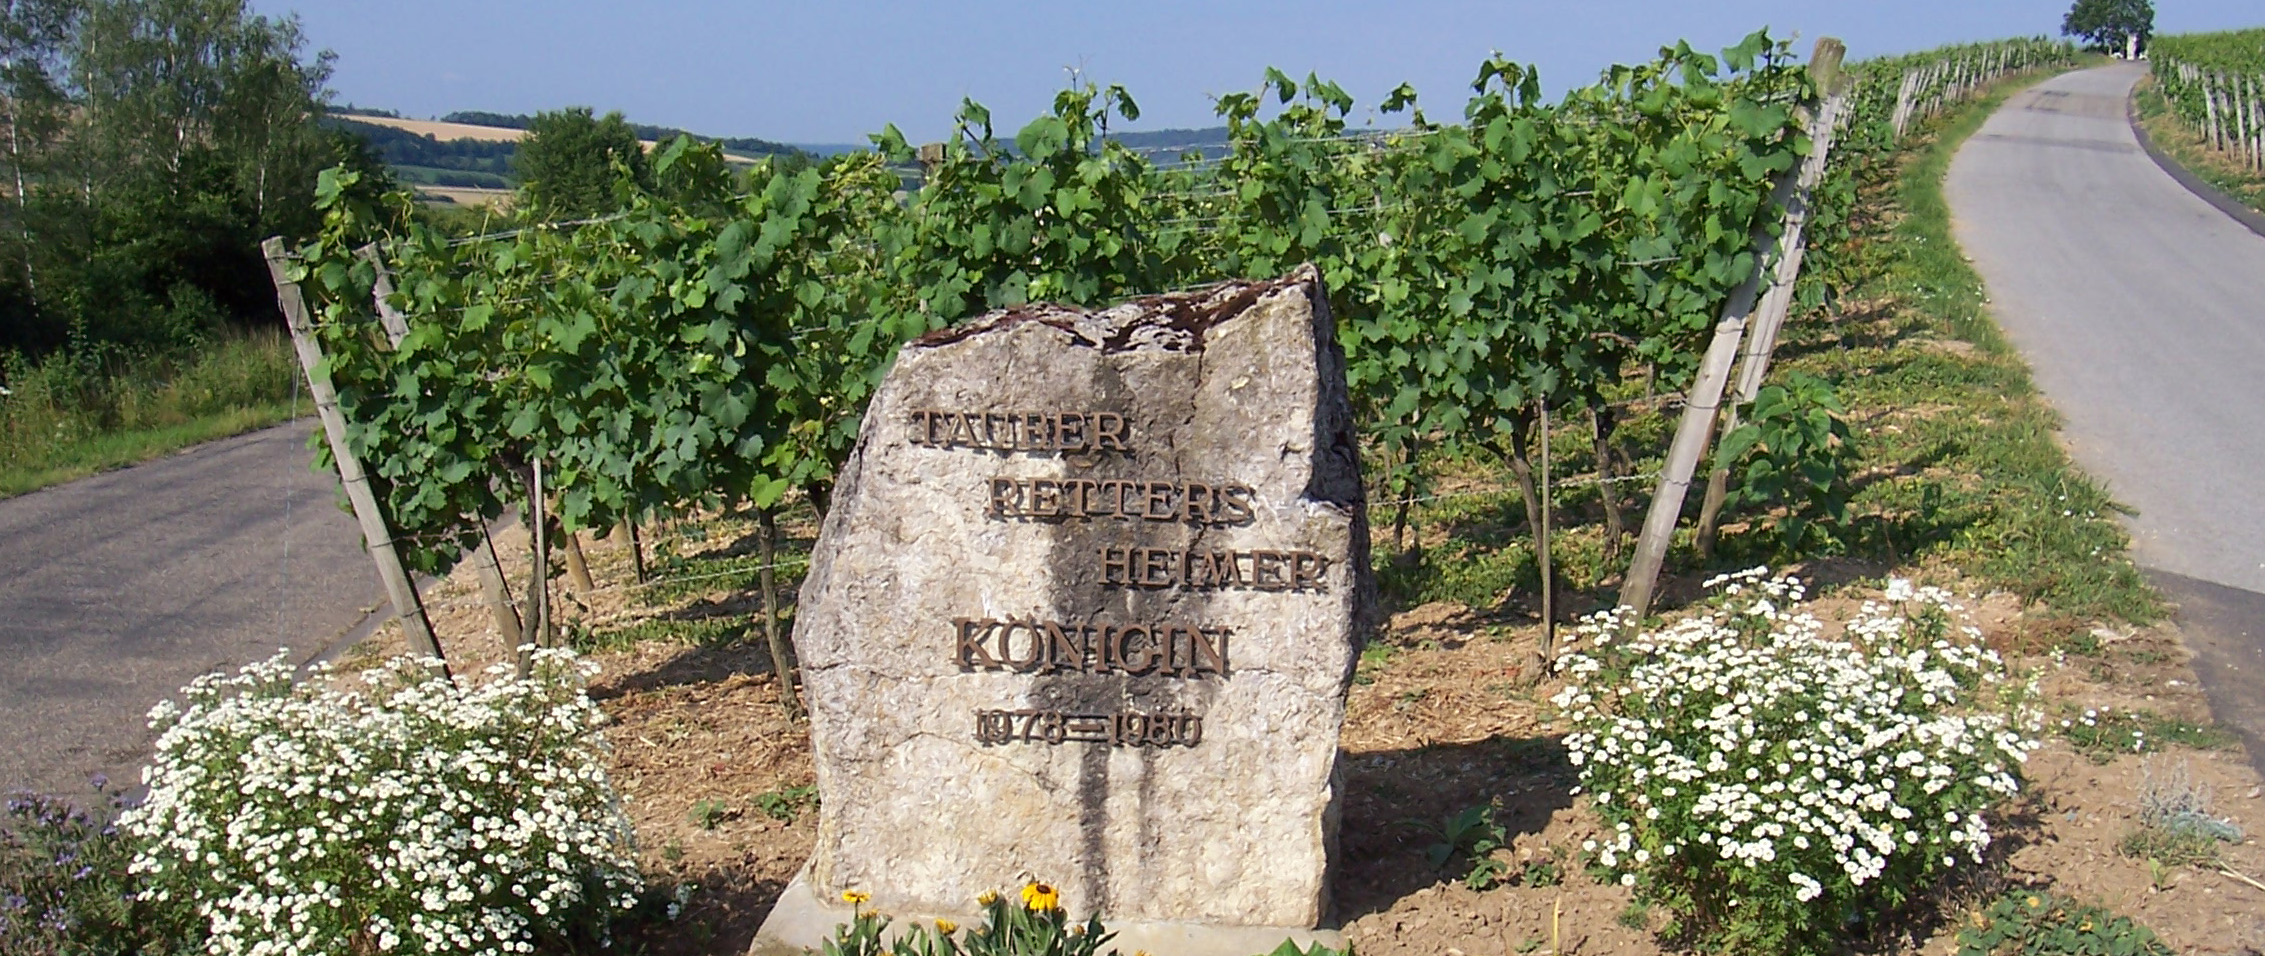 Weinbau in Tauberrettersheim